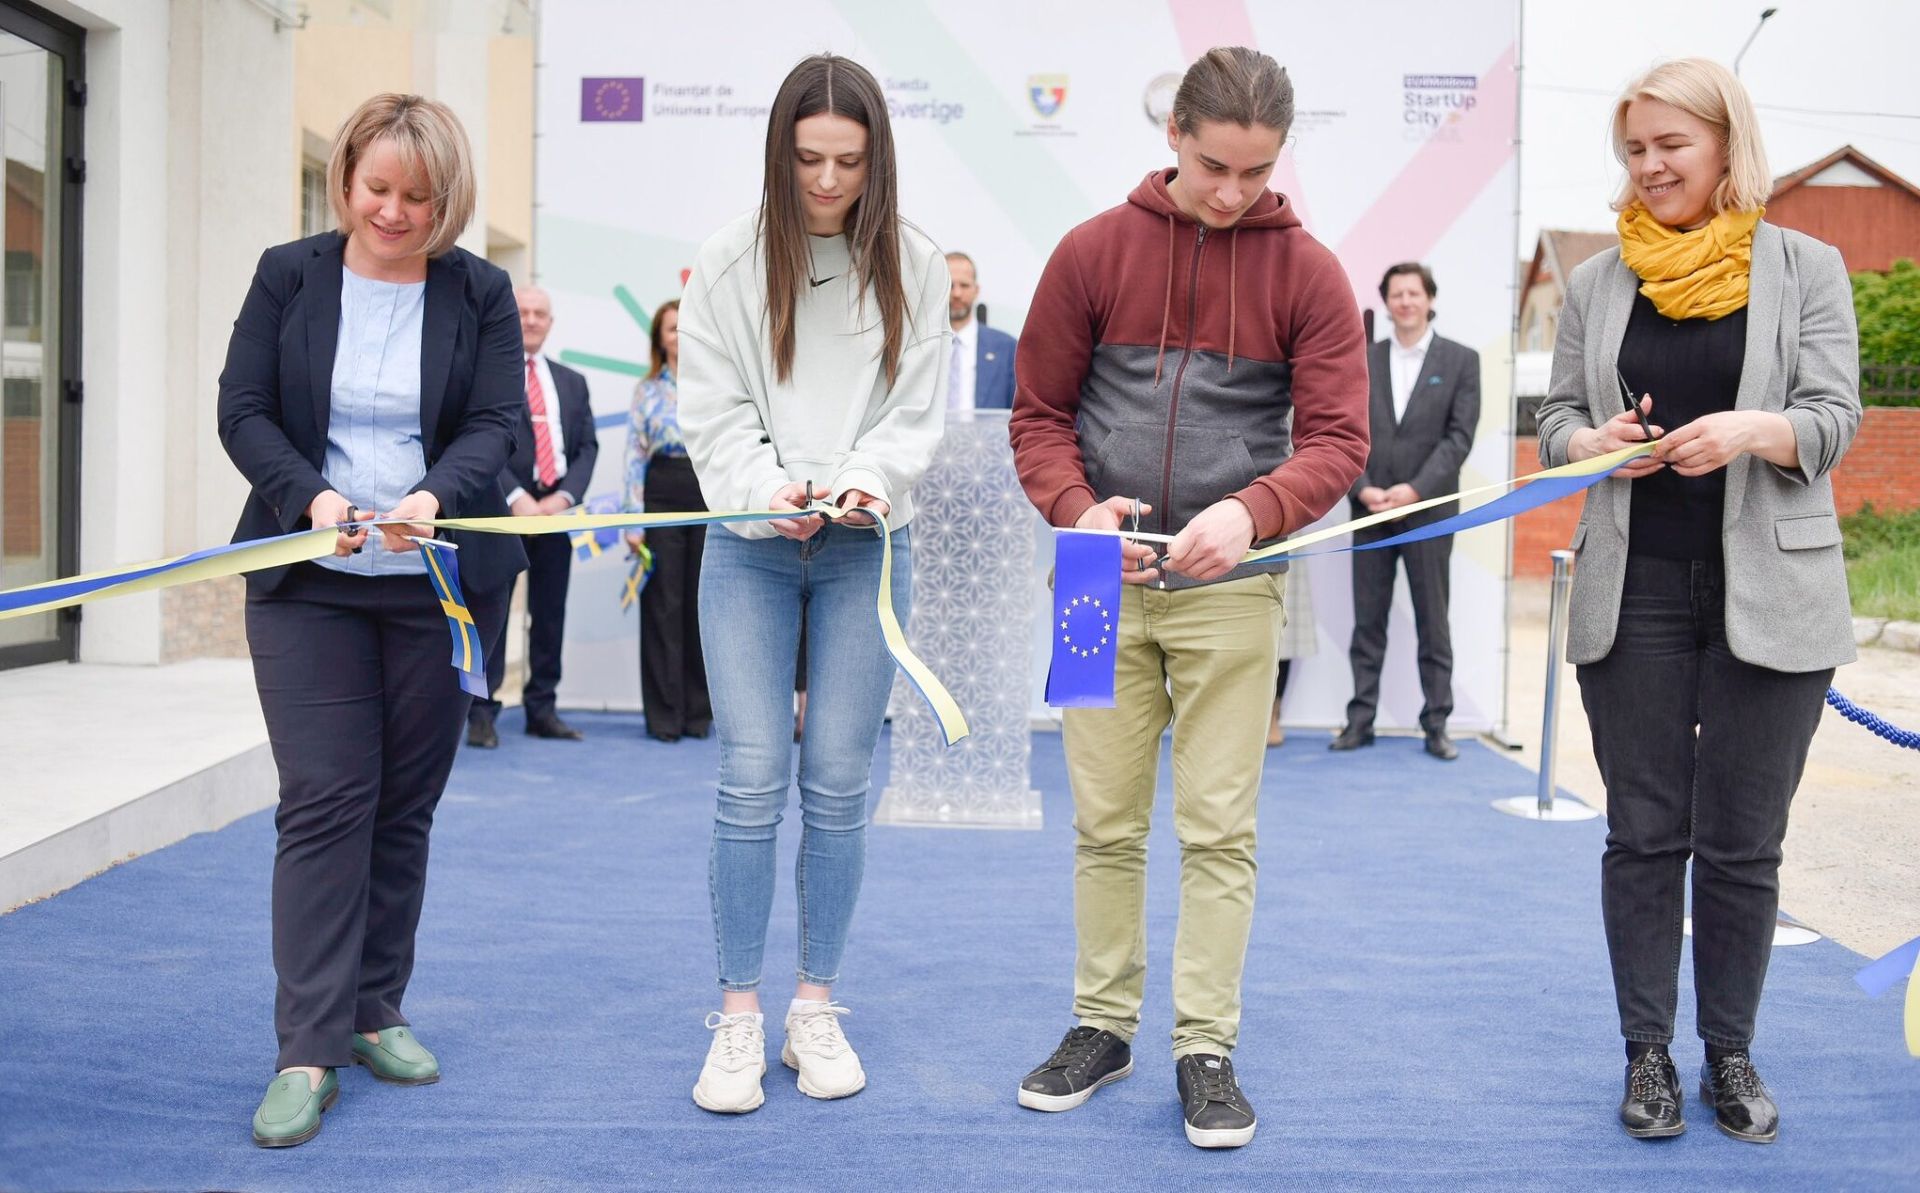 EU4Moldova: Innovation centre opens in Cahul 